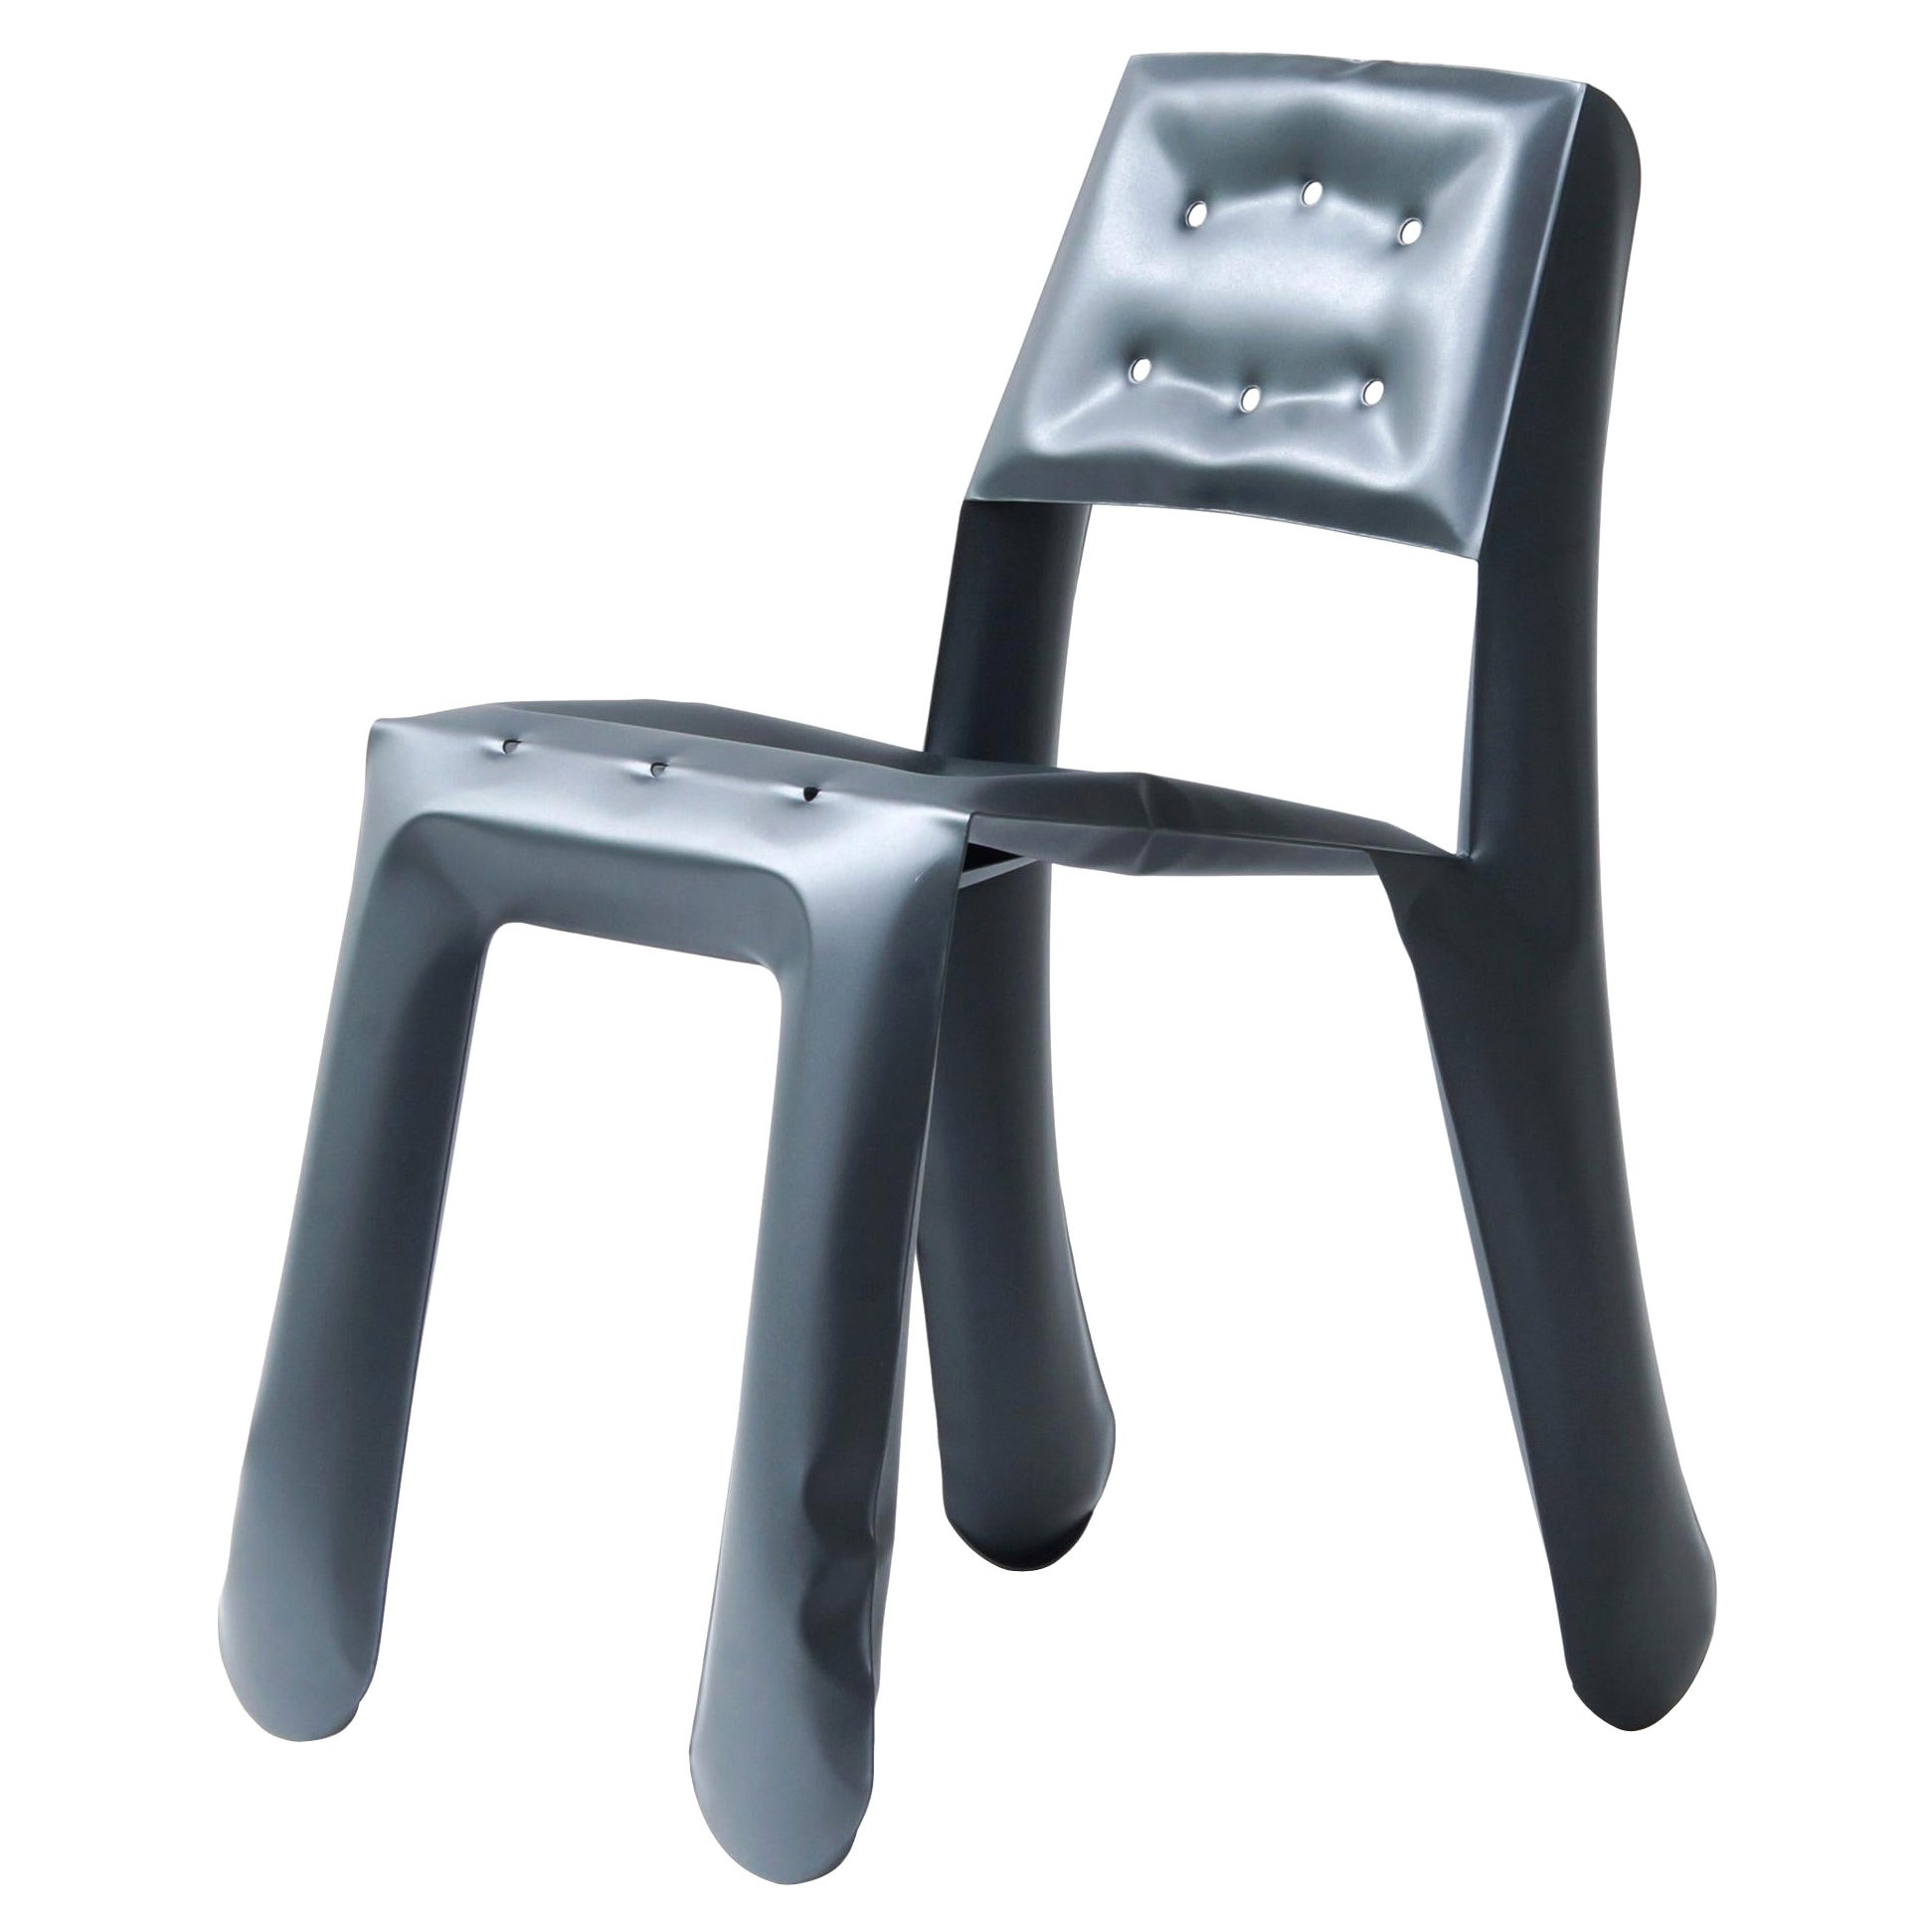 Chaise sculpturale 0,5 en aluminium et graphite Chippensteel de Zieta